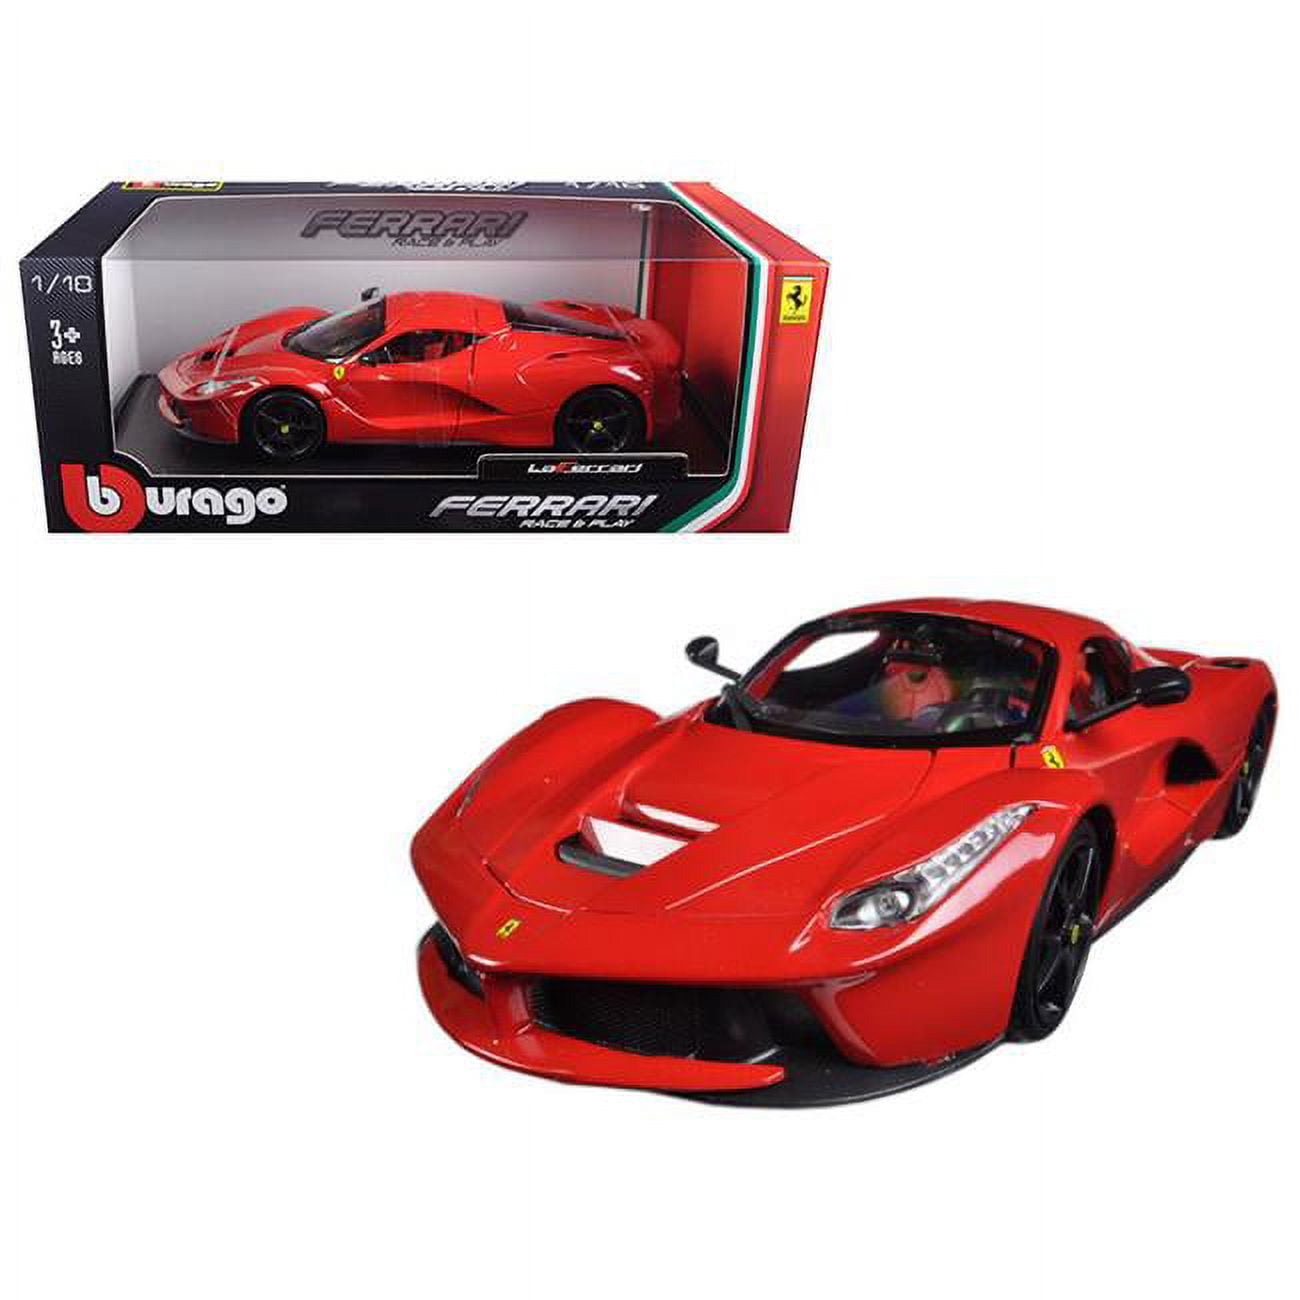 B 16001r-bk 1 Isto 18 Ferrari Laferrari F70 Wheels Diecast Model Car, Red With Black